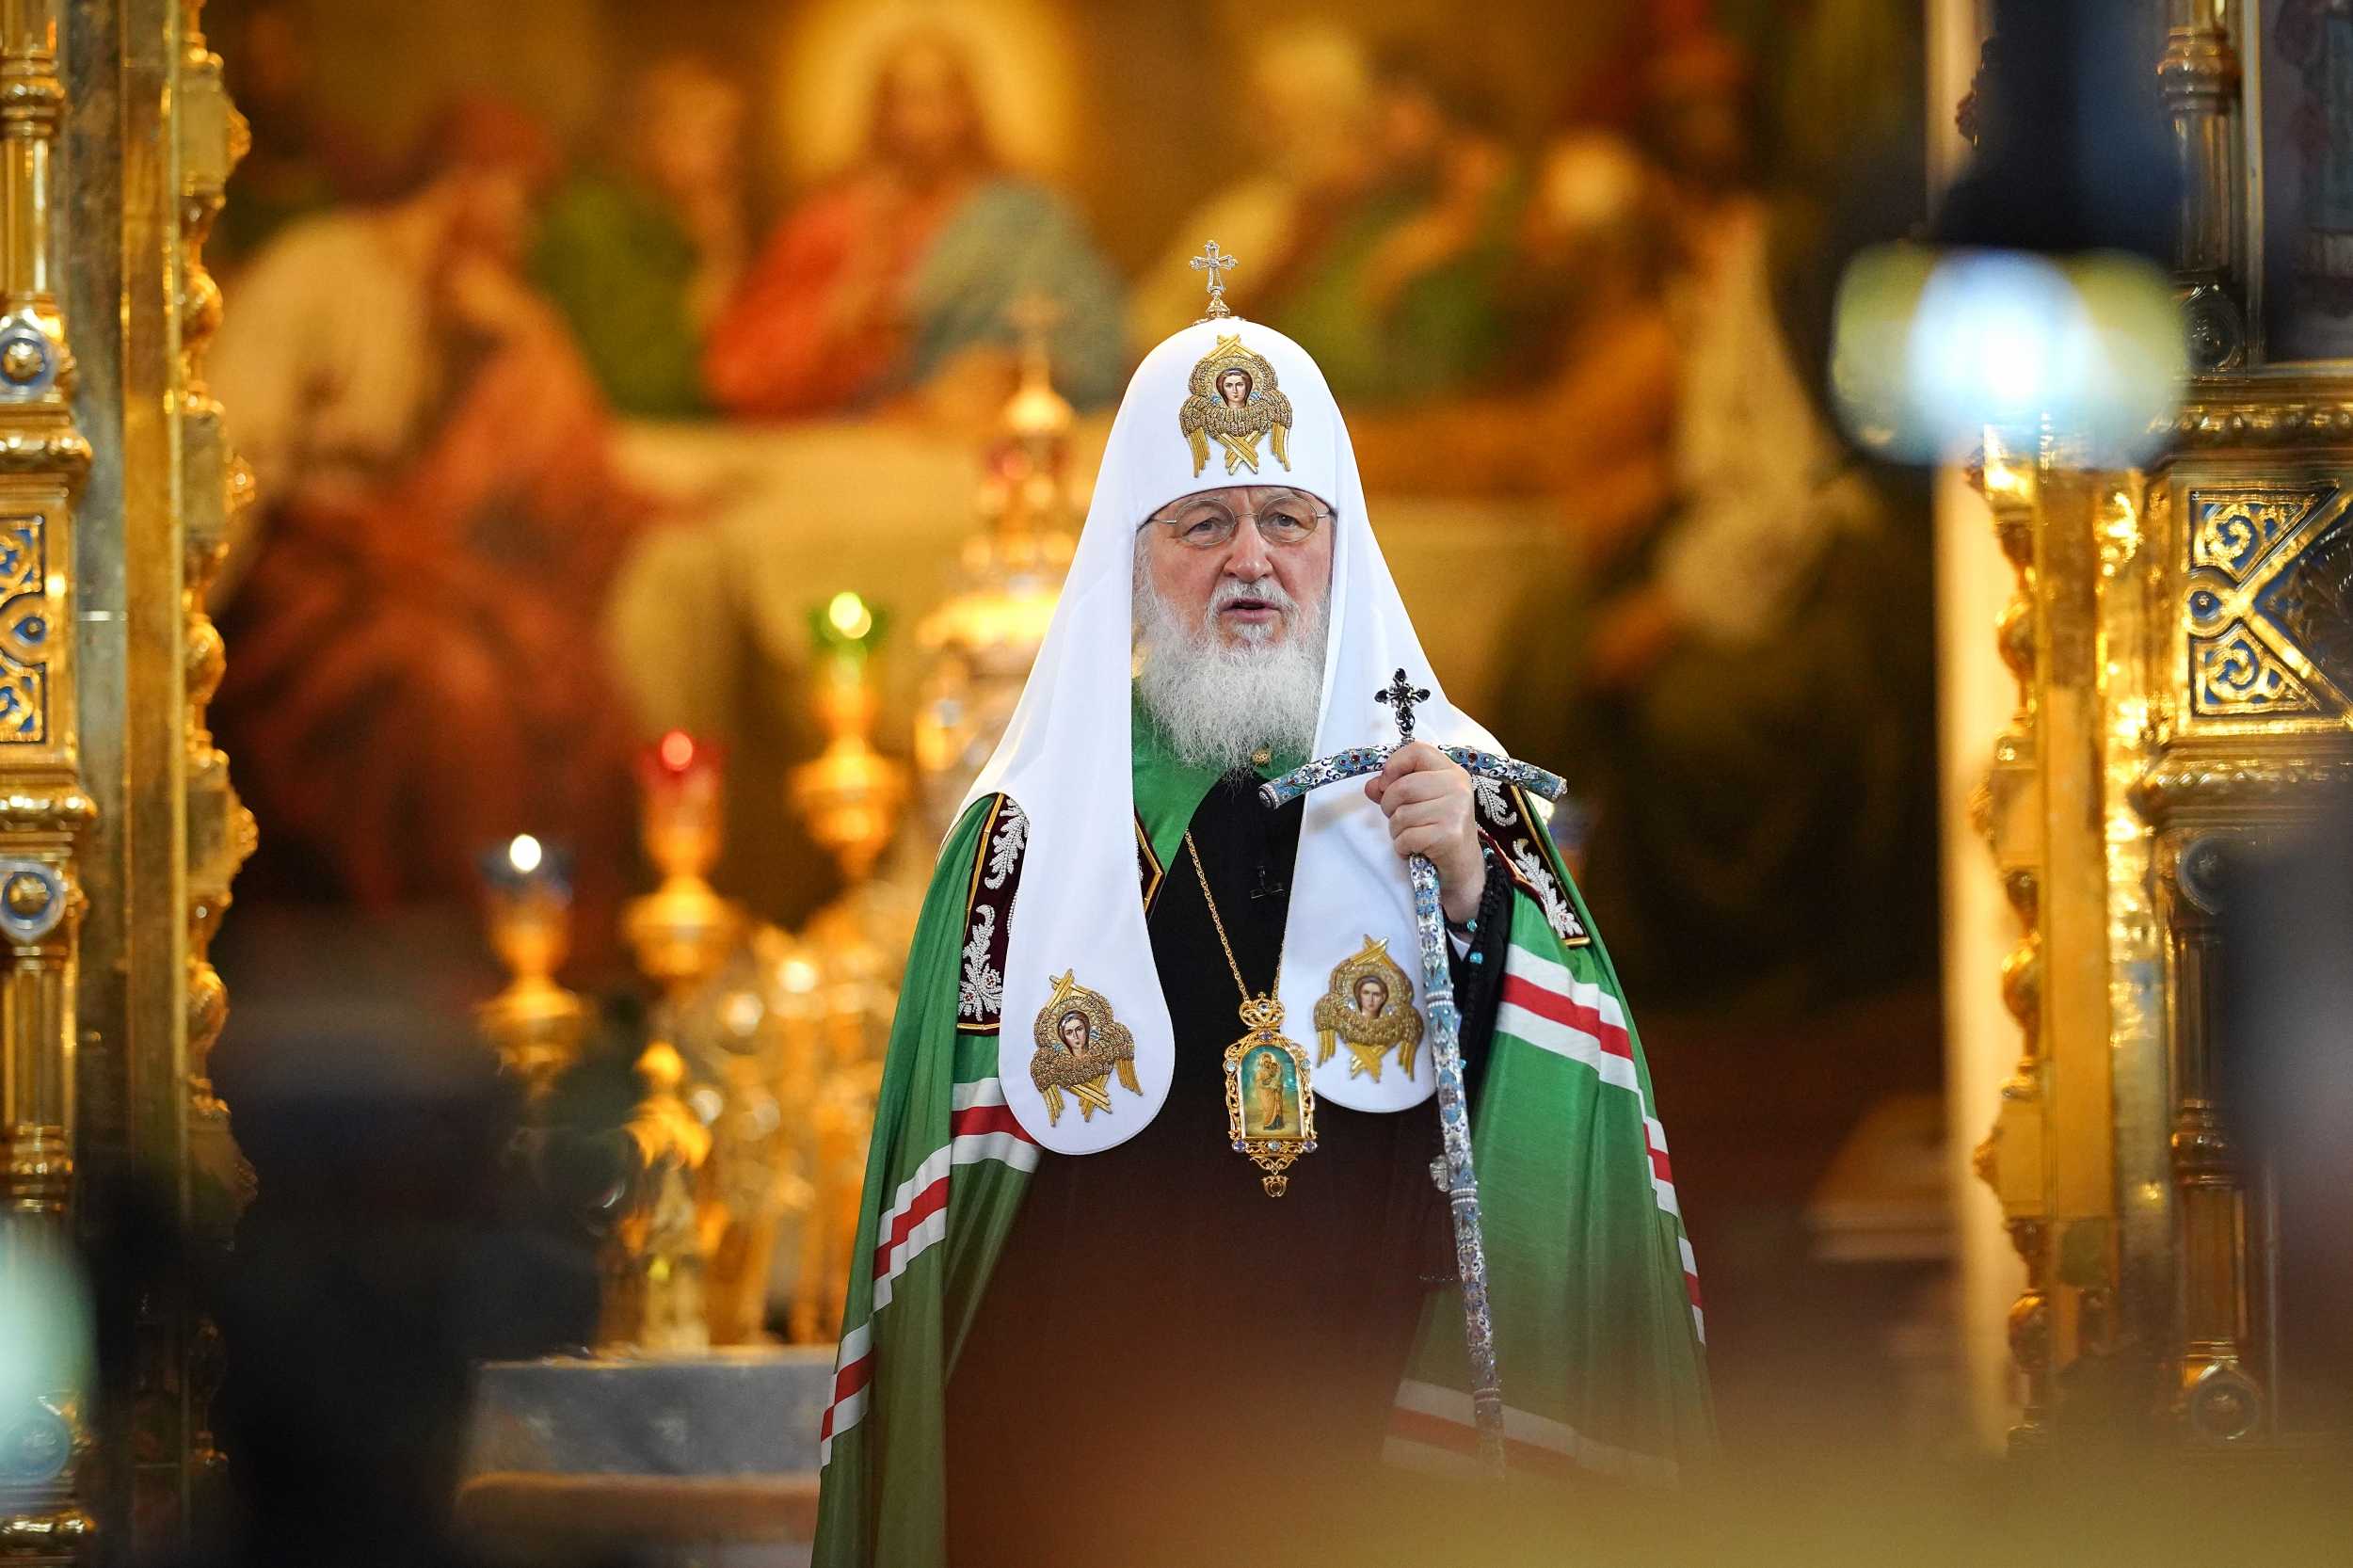 Обращение Святейшего Патриарха Кирилла от 16 марта 2022 года в связи с событиями на Украине